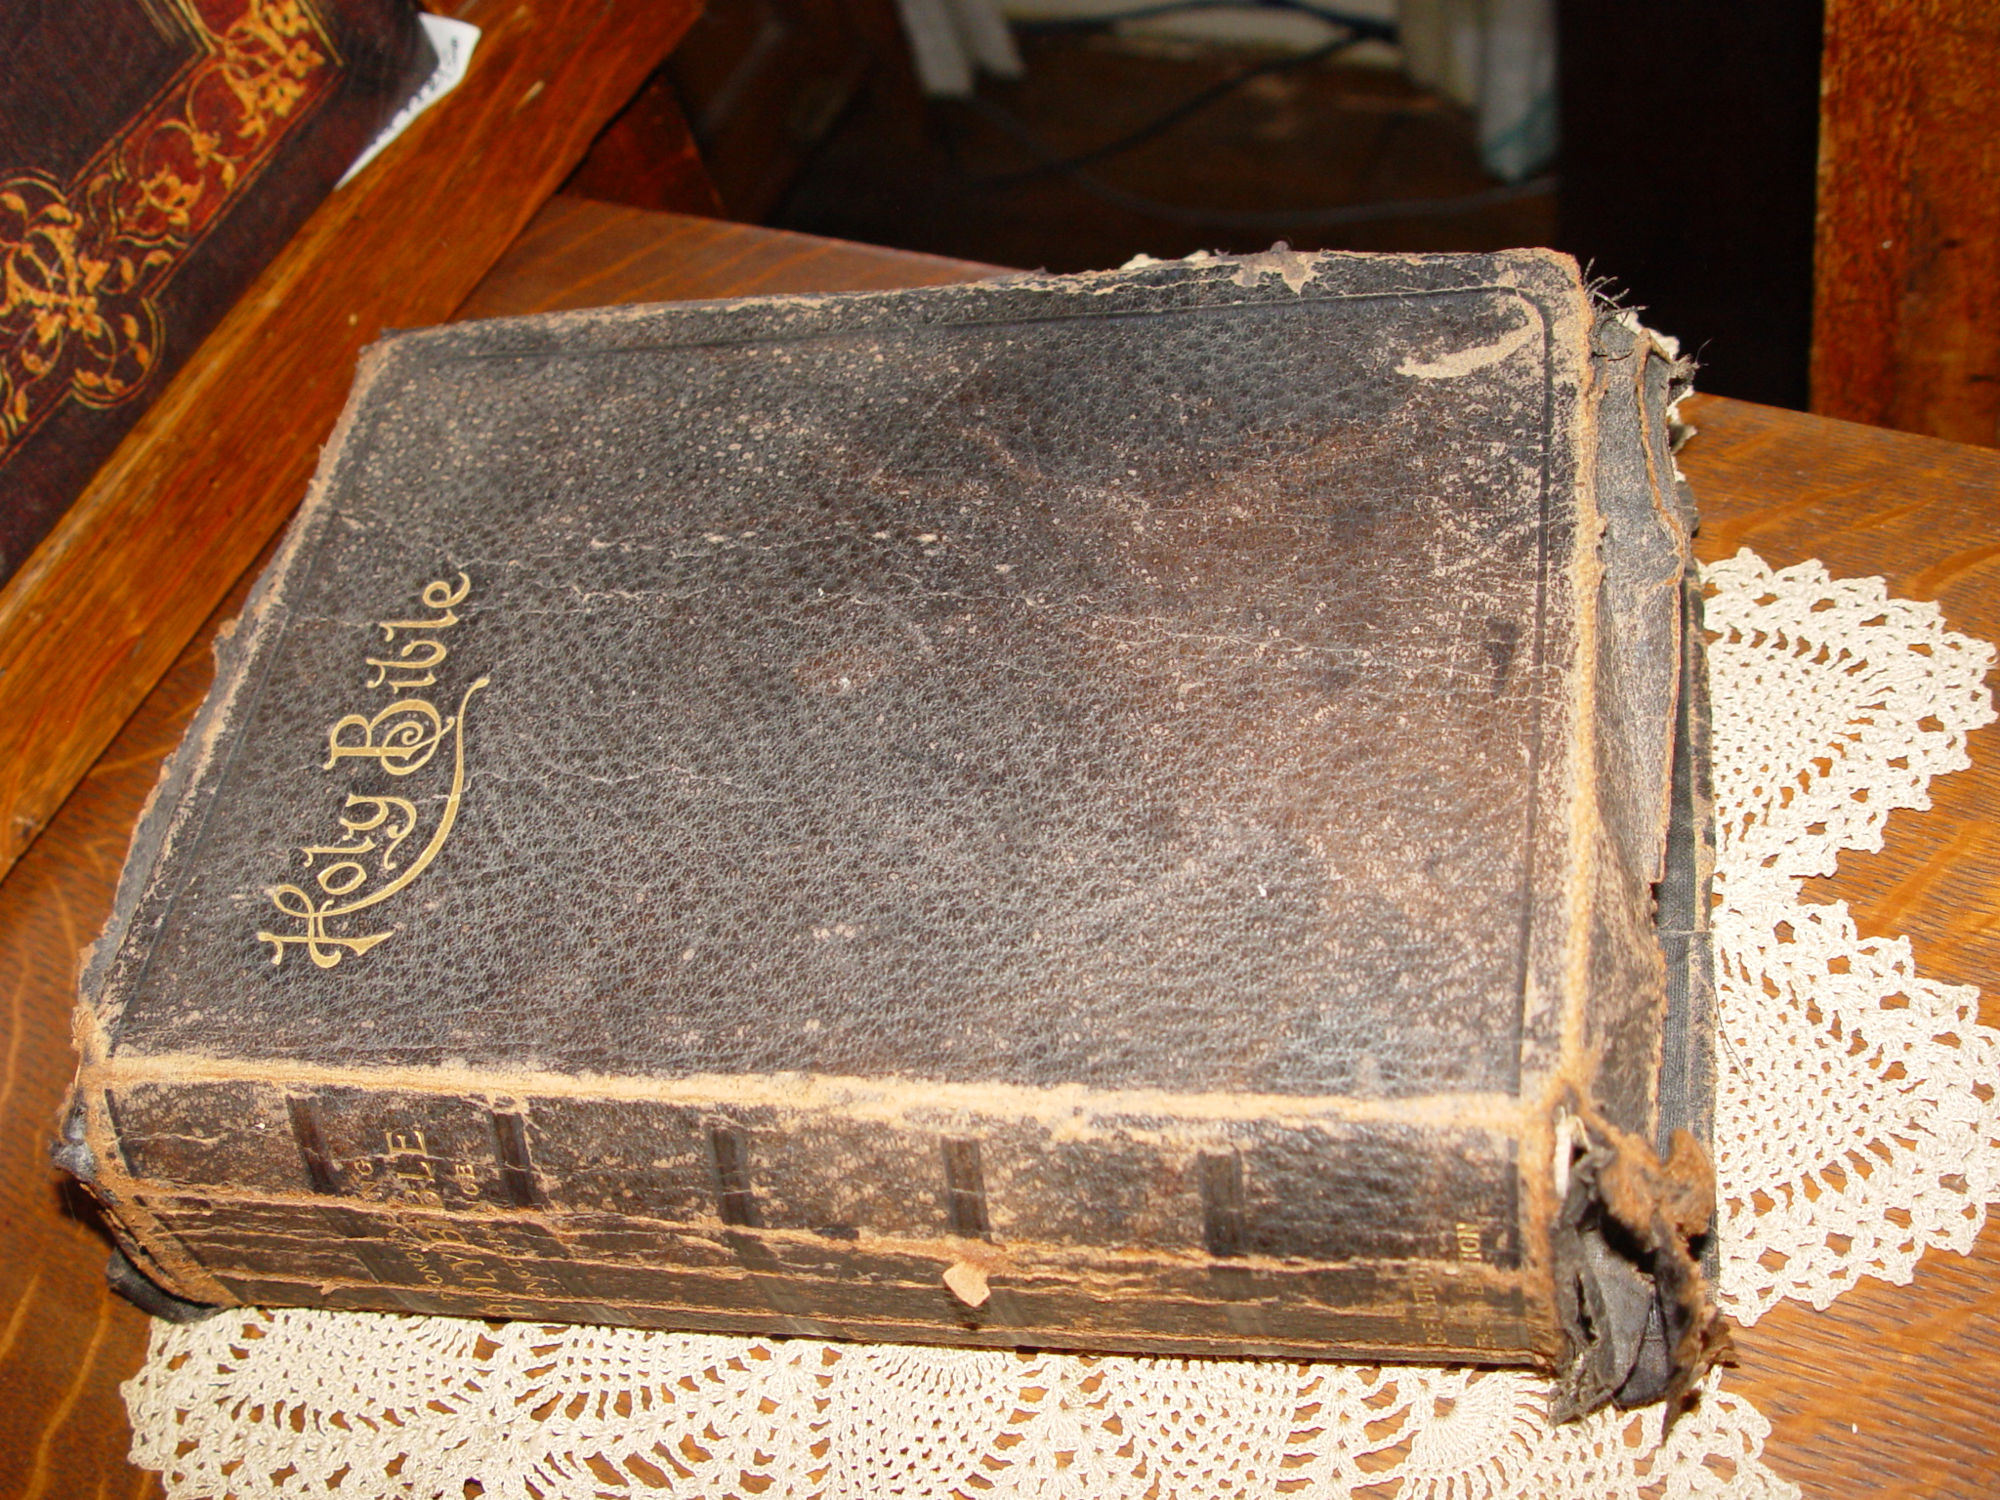 1895 Self-Pronouncing S.S. Teacher's
                        Combination Bible